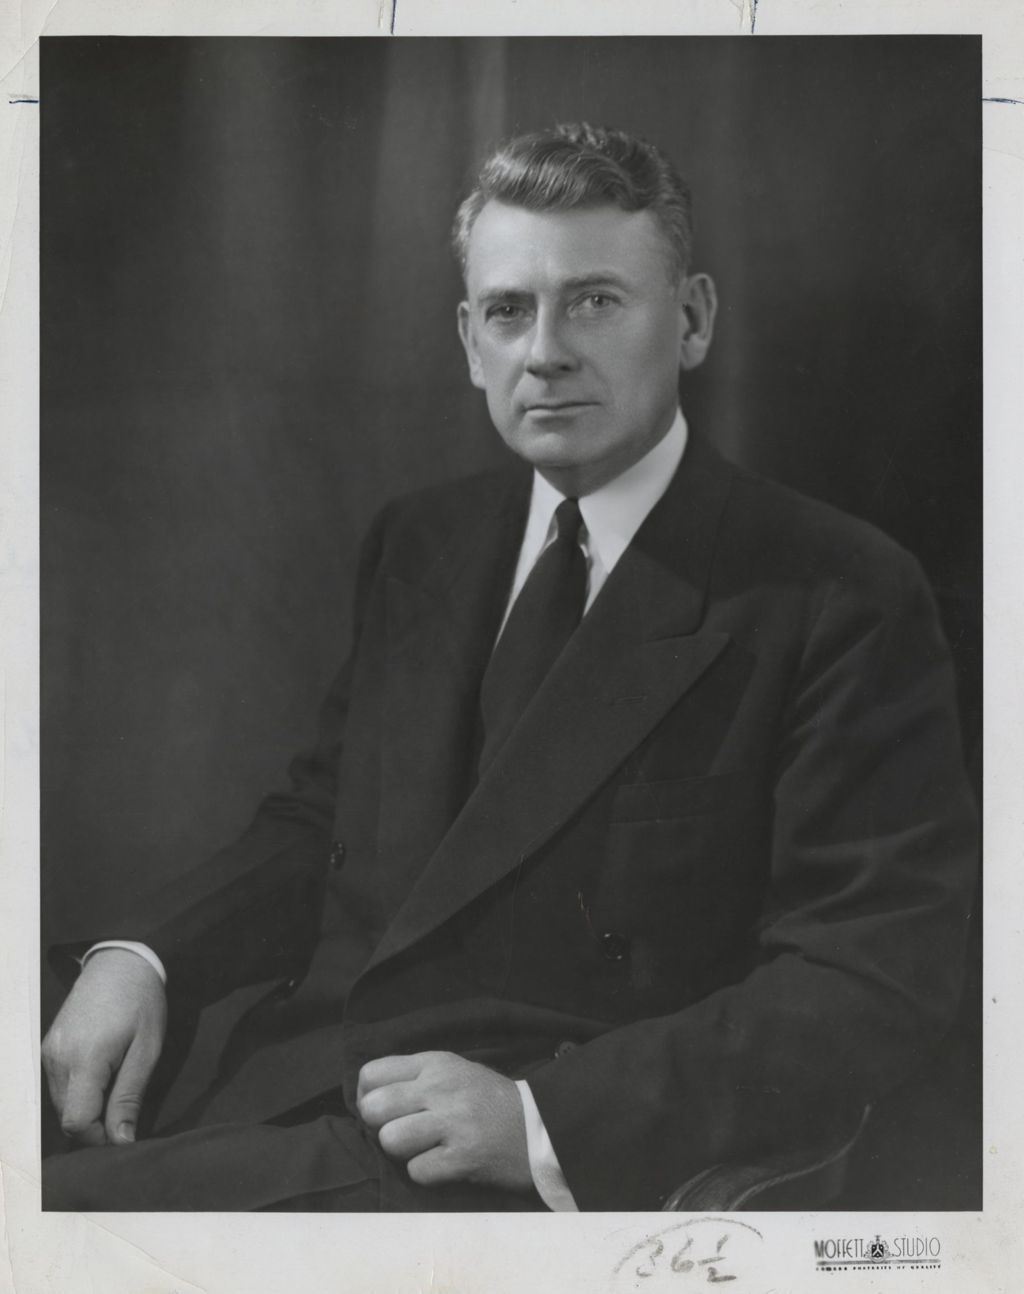 Photo portrait of Hull-House Head Resident Russell W. Ballard